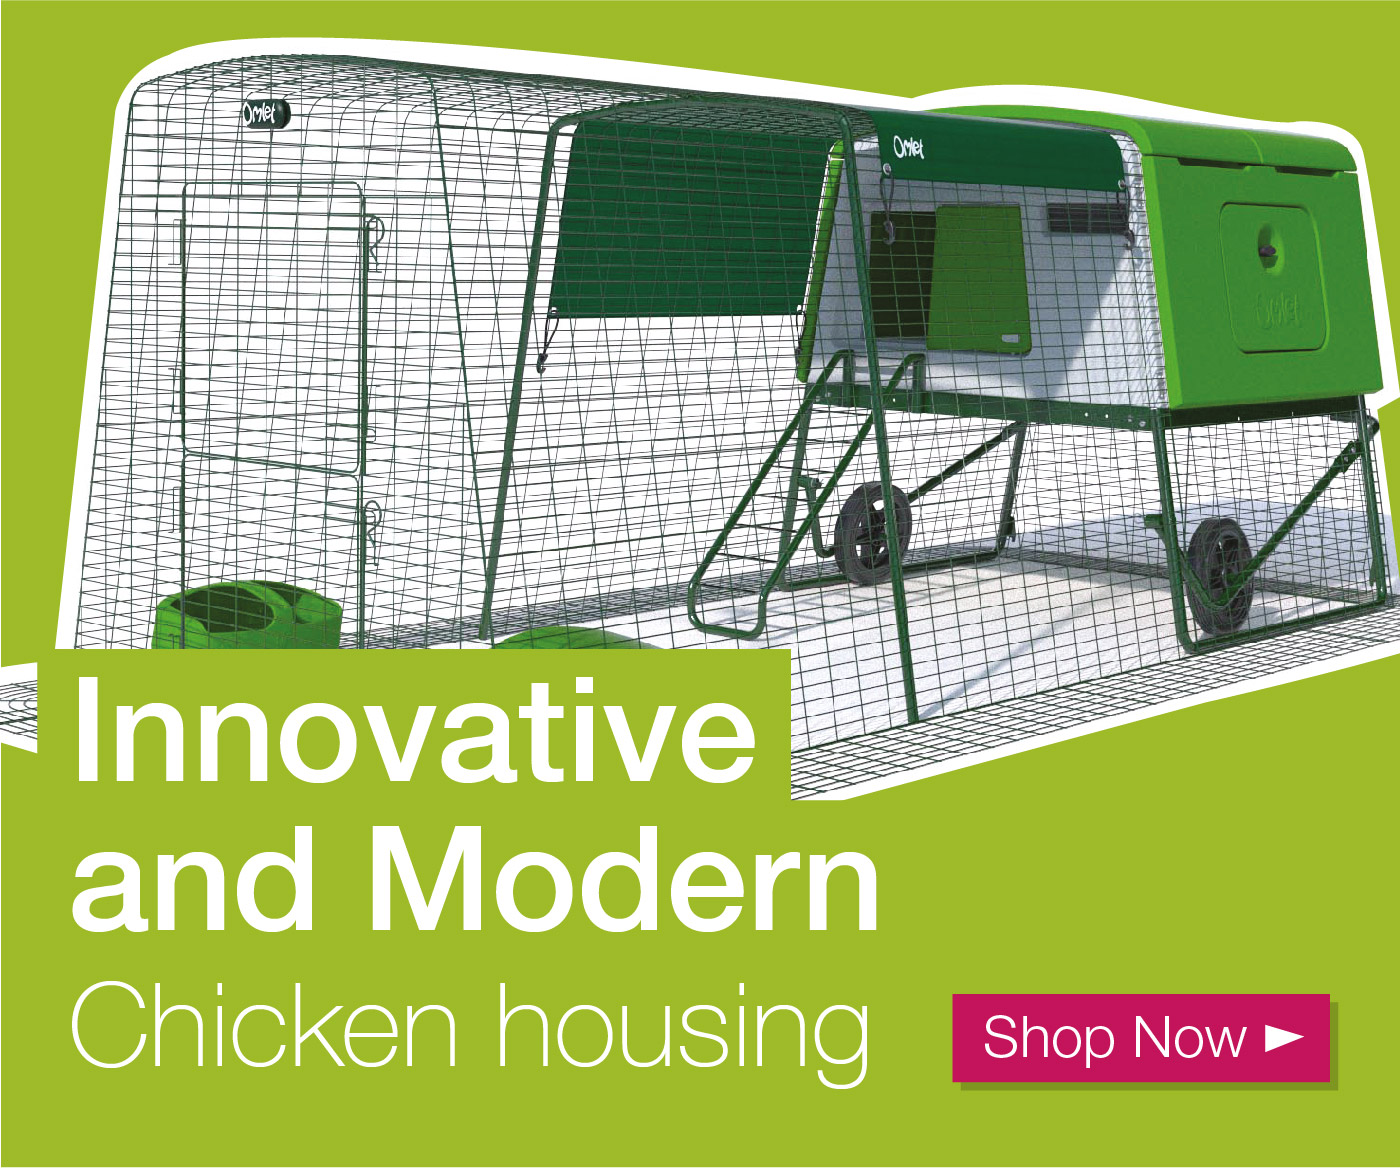 Innovative and modern chicken housing